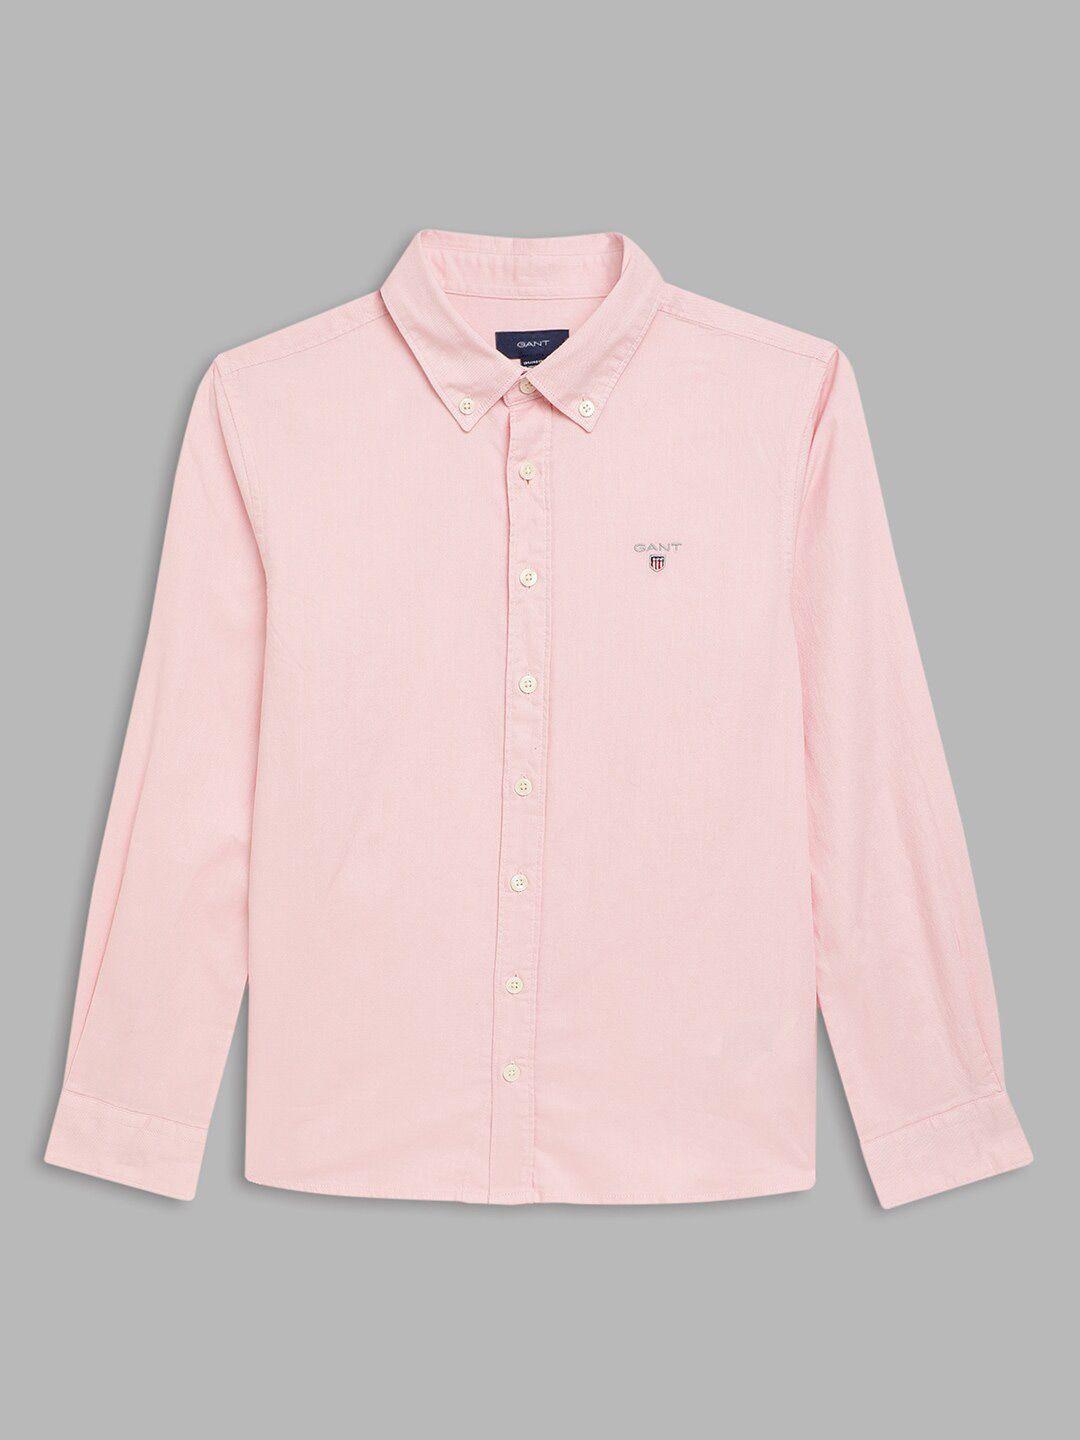 gant boys pink classic casual shirt